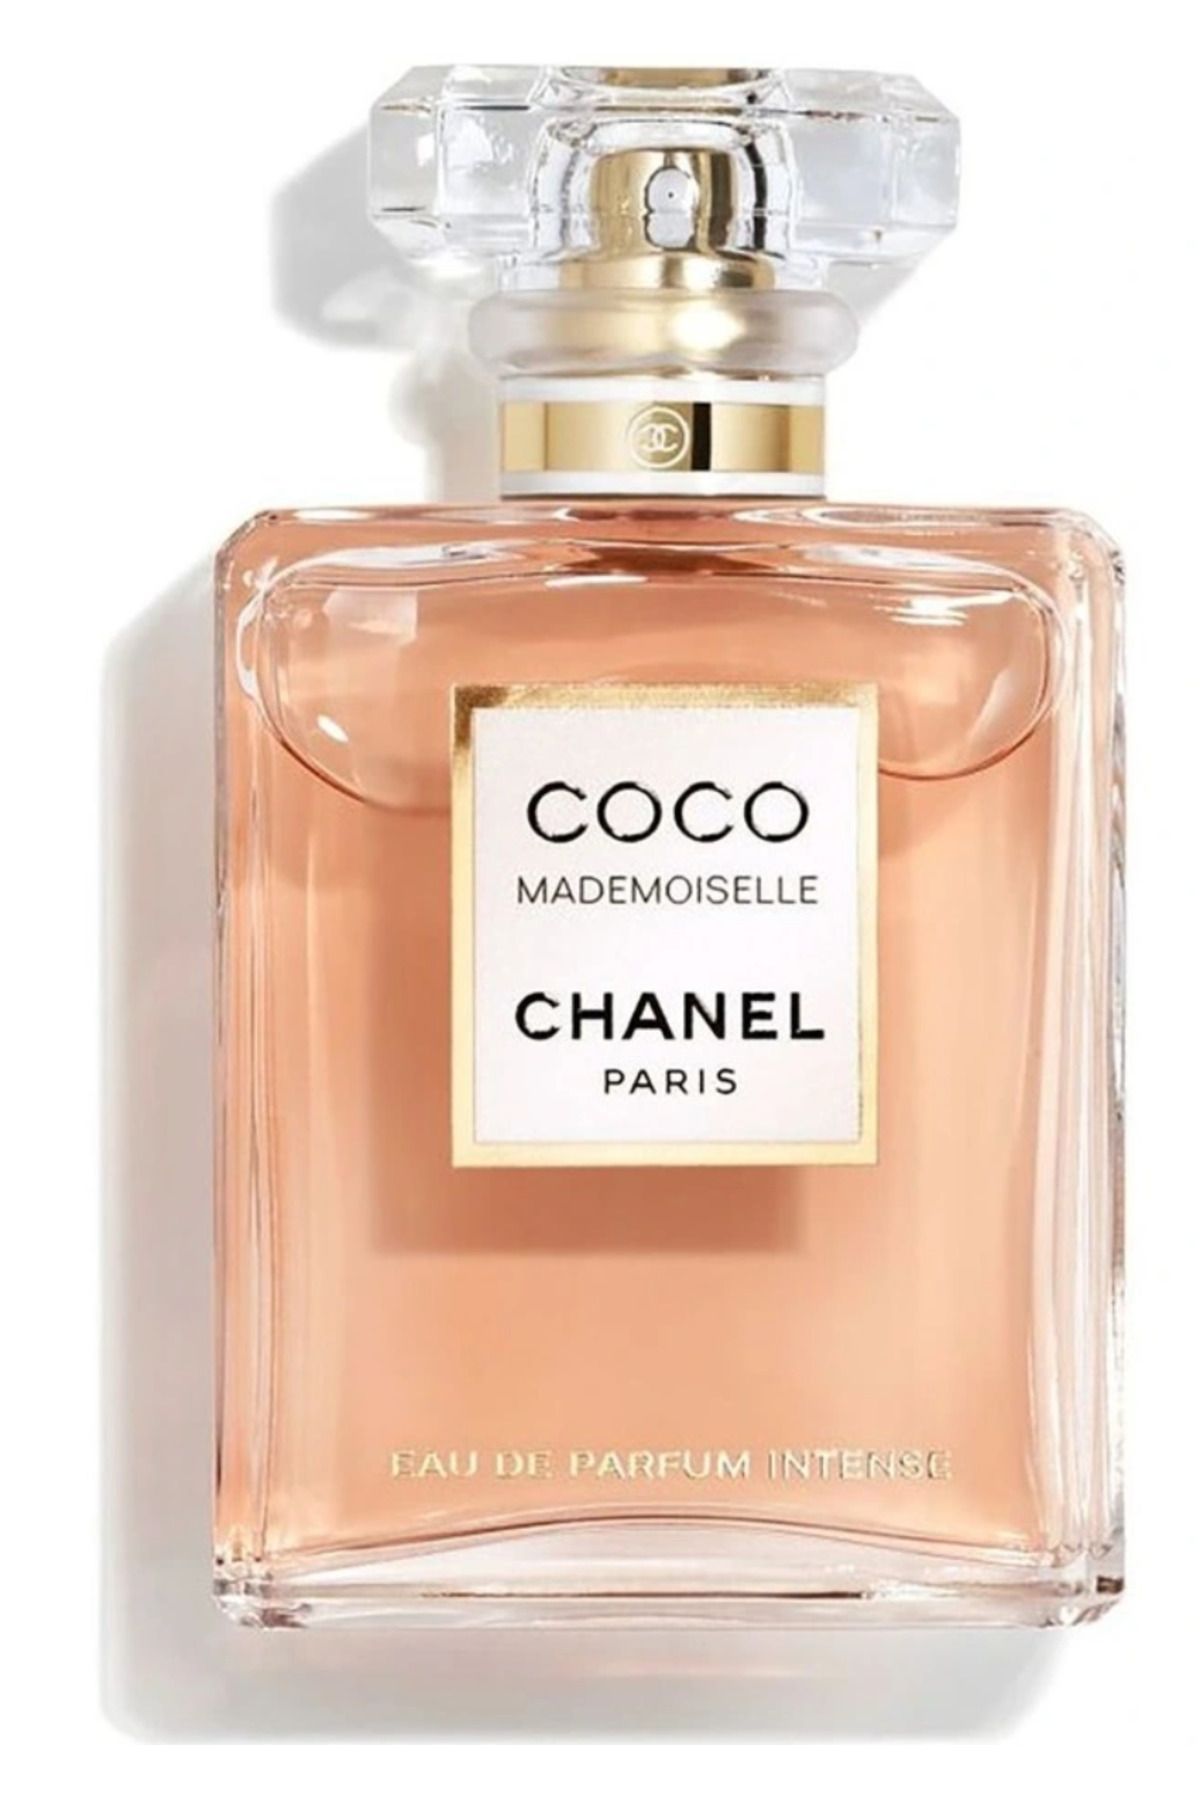 Chanel Coco Mademoıselle Eau de Parfum Intense 100 Ml